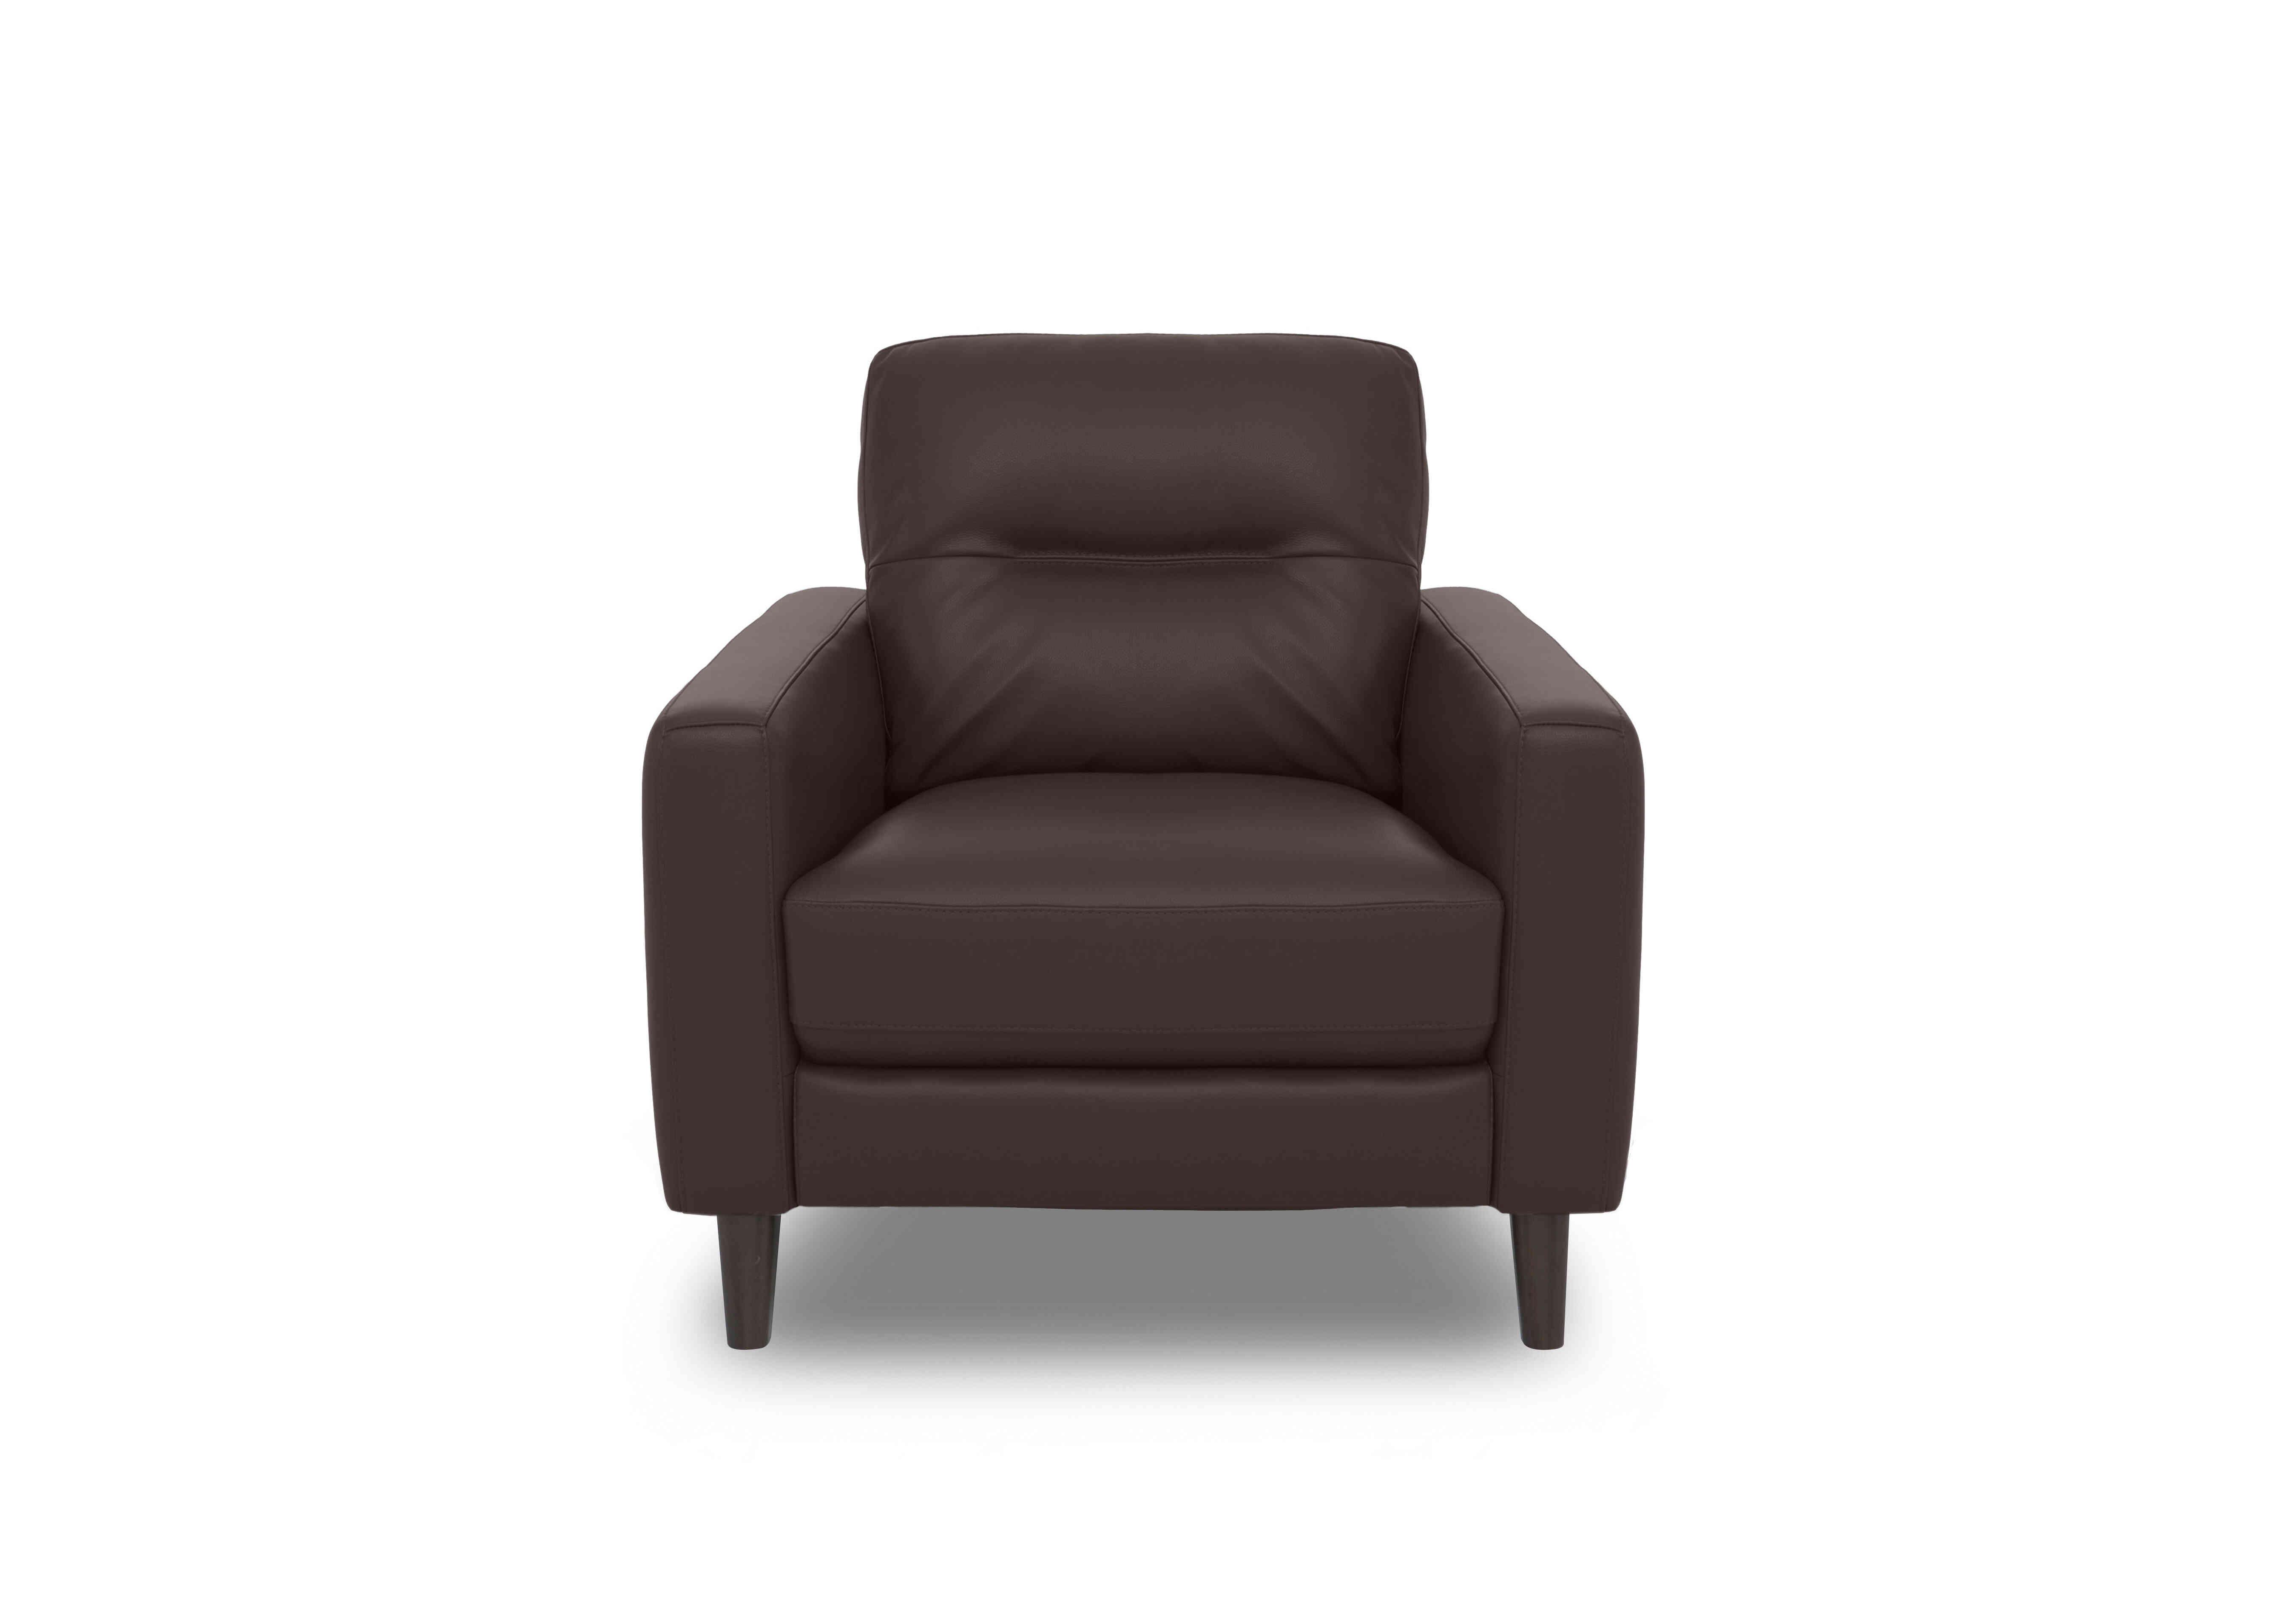 Jules Leather Chair in An-727b Dark Brown on Furniture Village